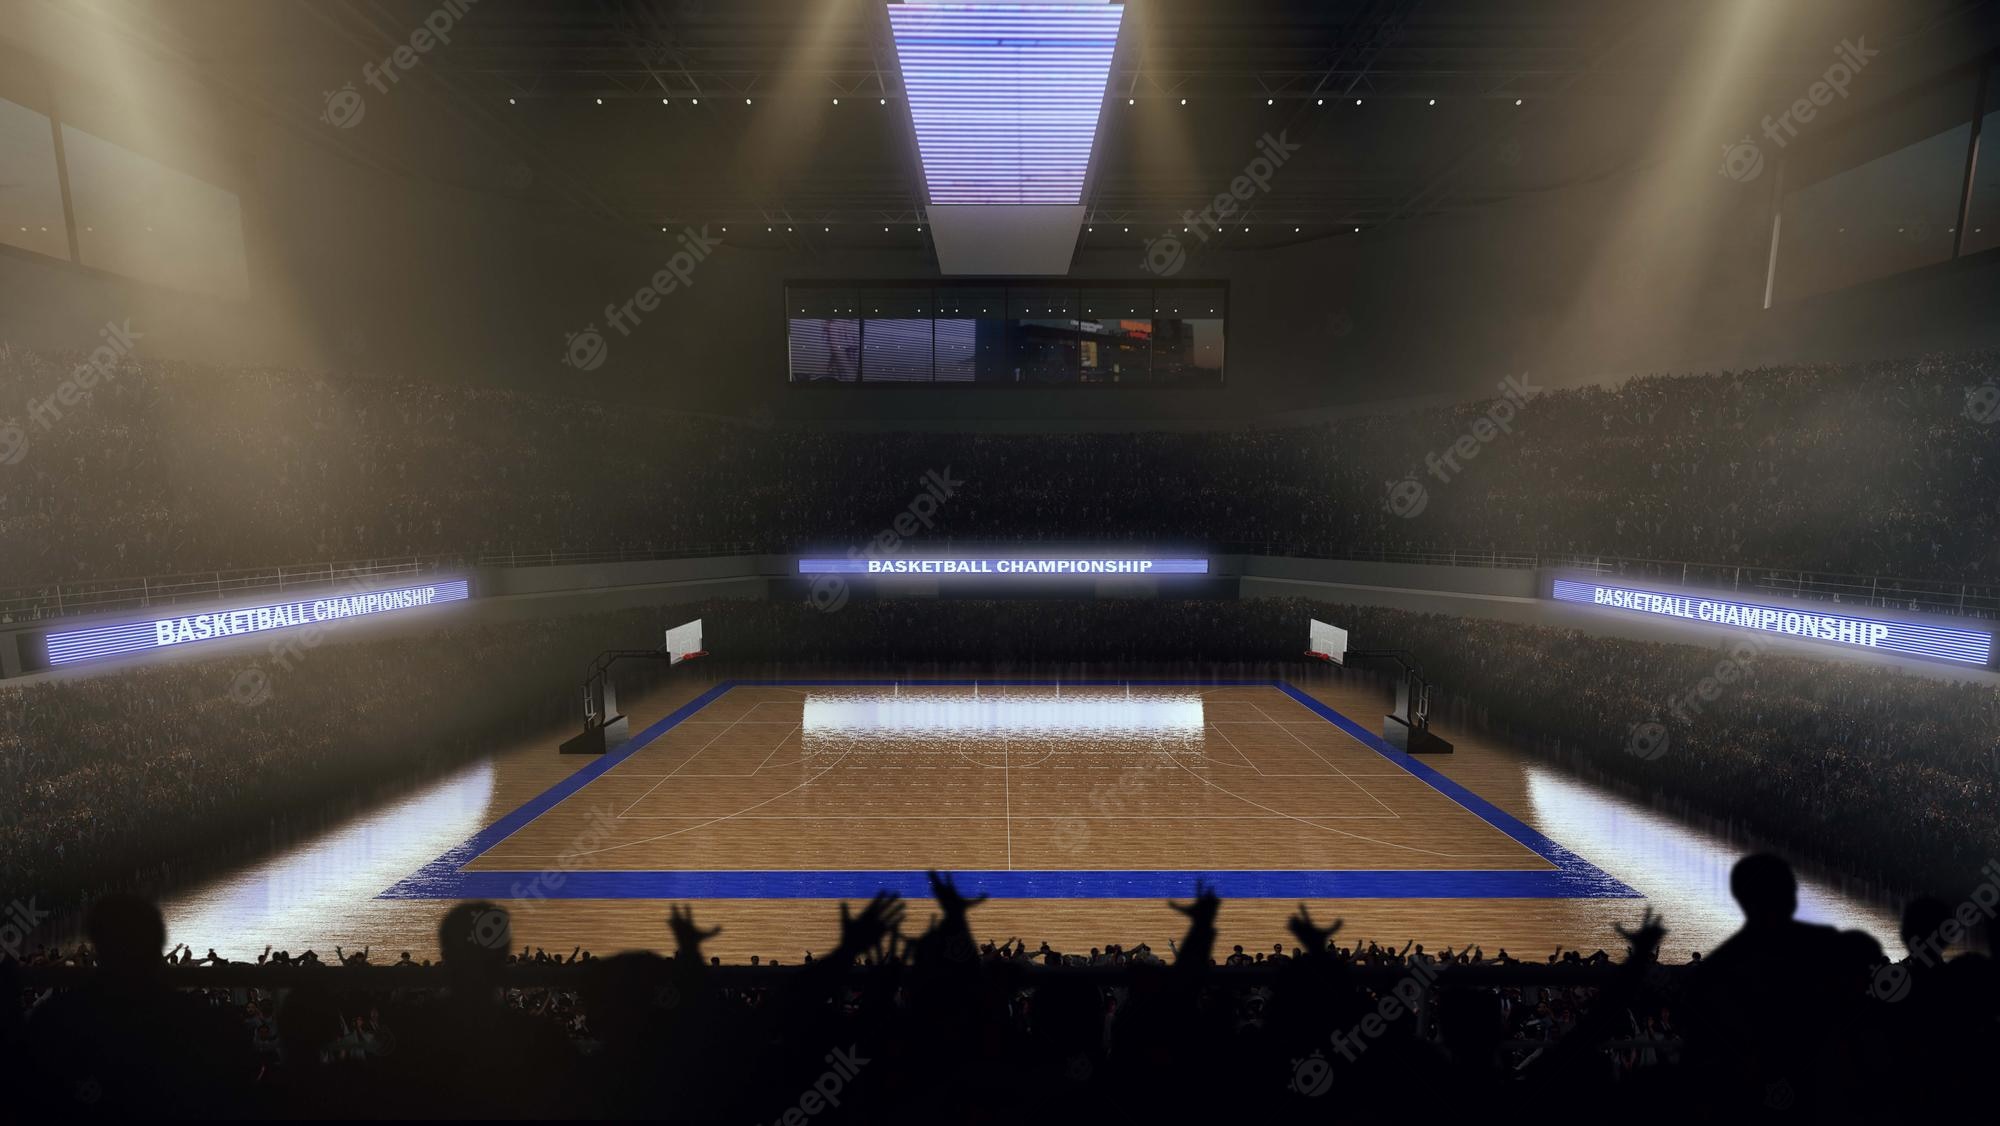 Basketball arena Image. Free Vectors, & PSD